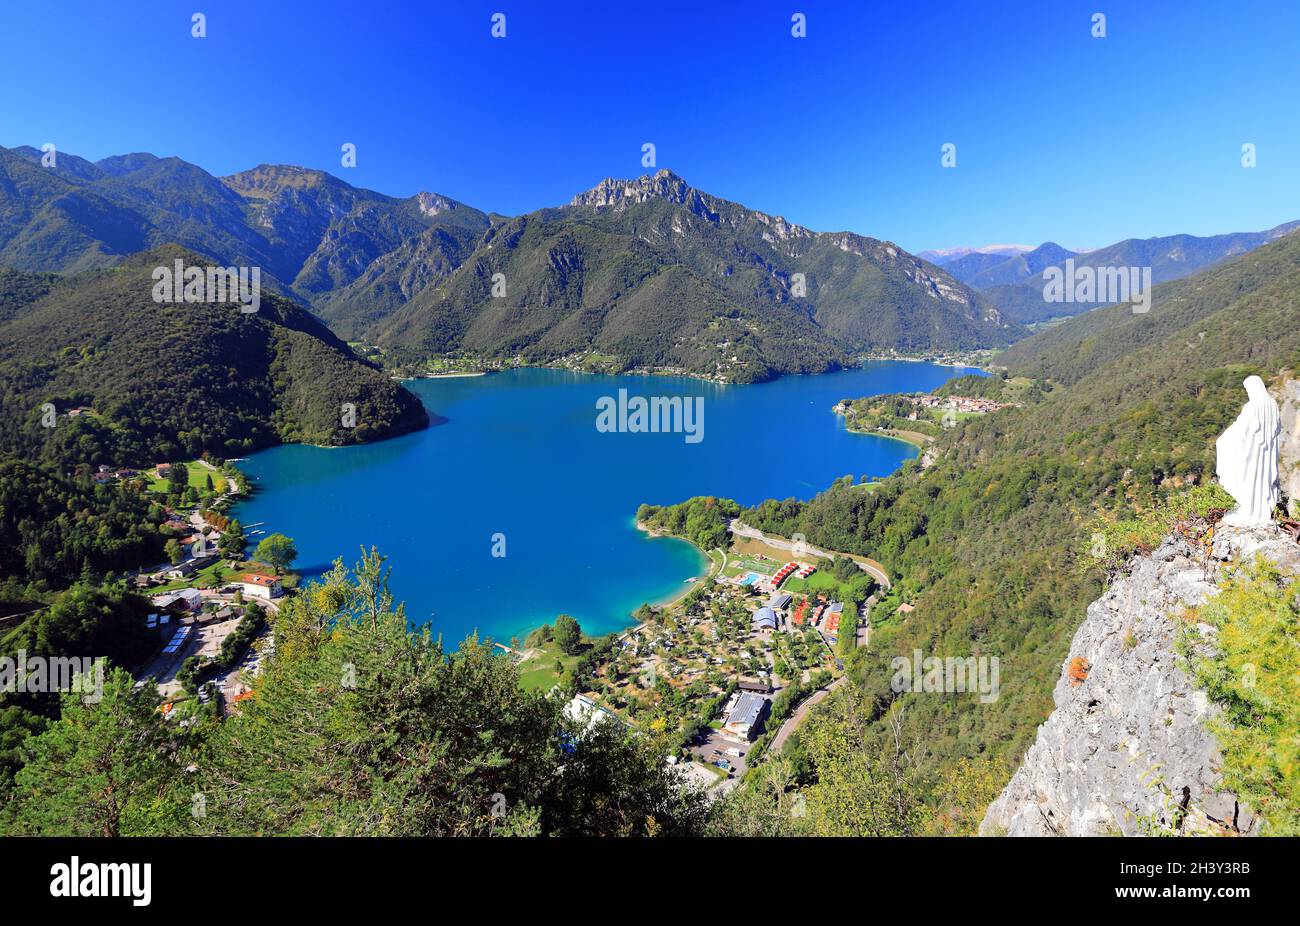 The beautiful Lake Ledro in Trentino. Northern Italy, Europe. Stock Photo